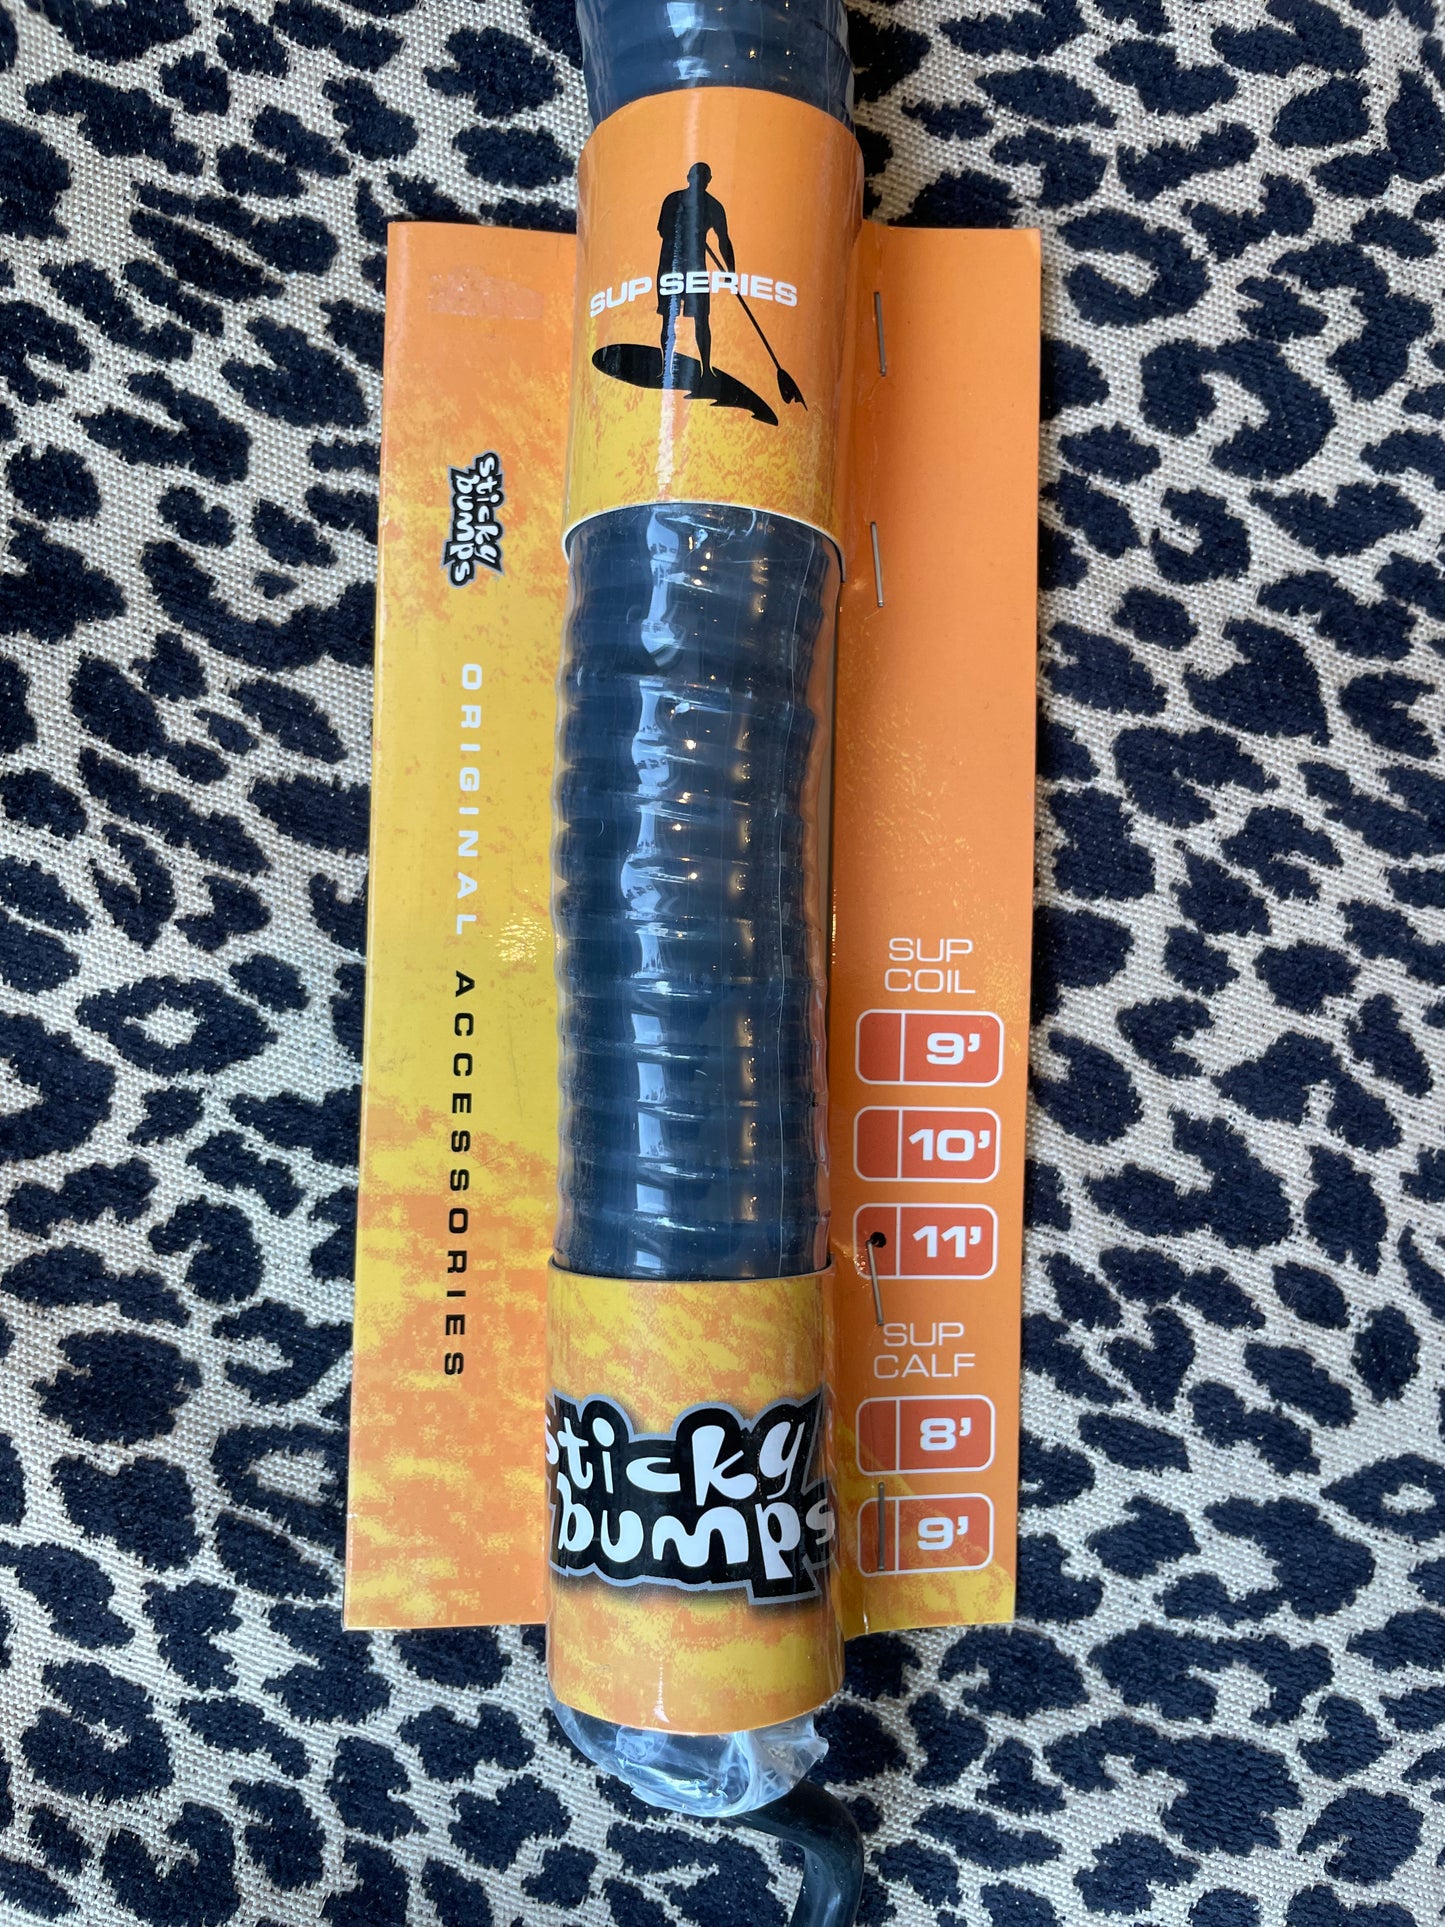 Sticky Bumps Sup Coil Leash- Black-10’, 11’, 12’